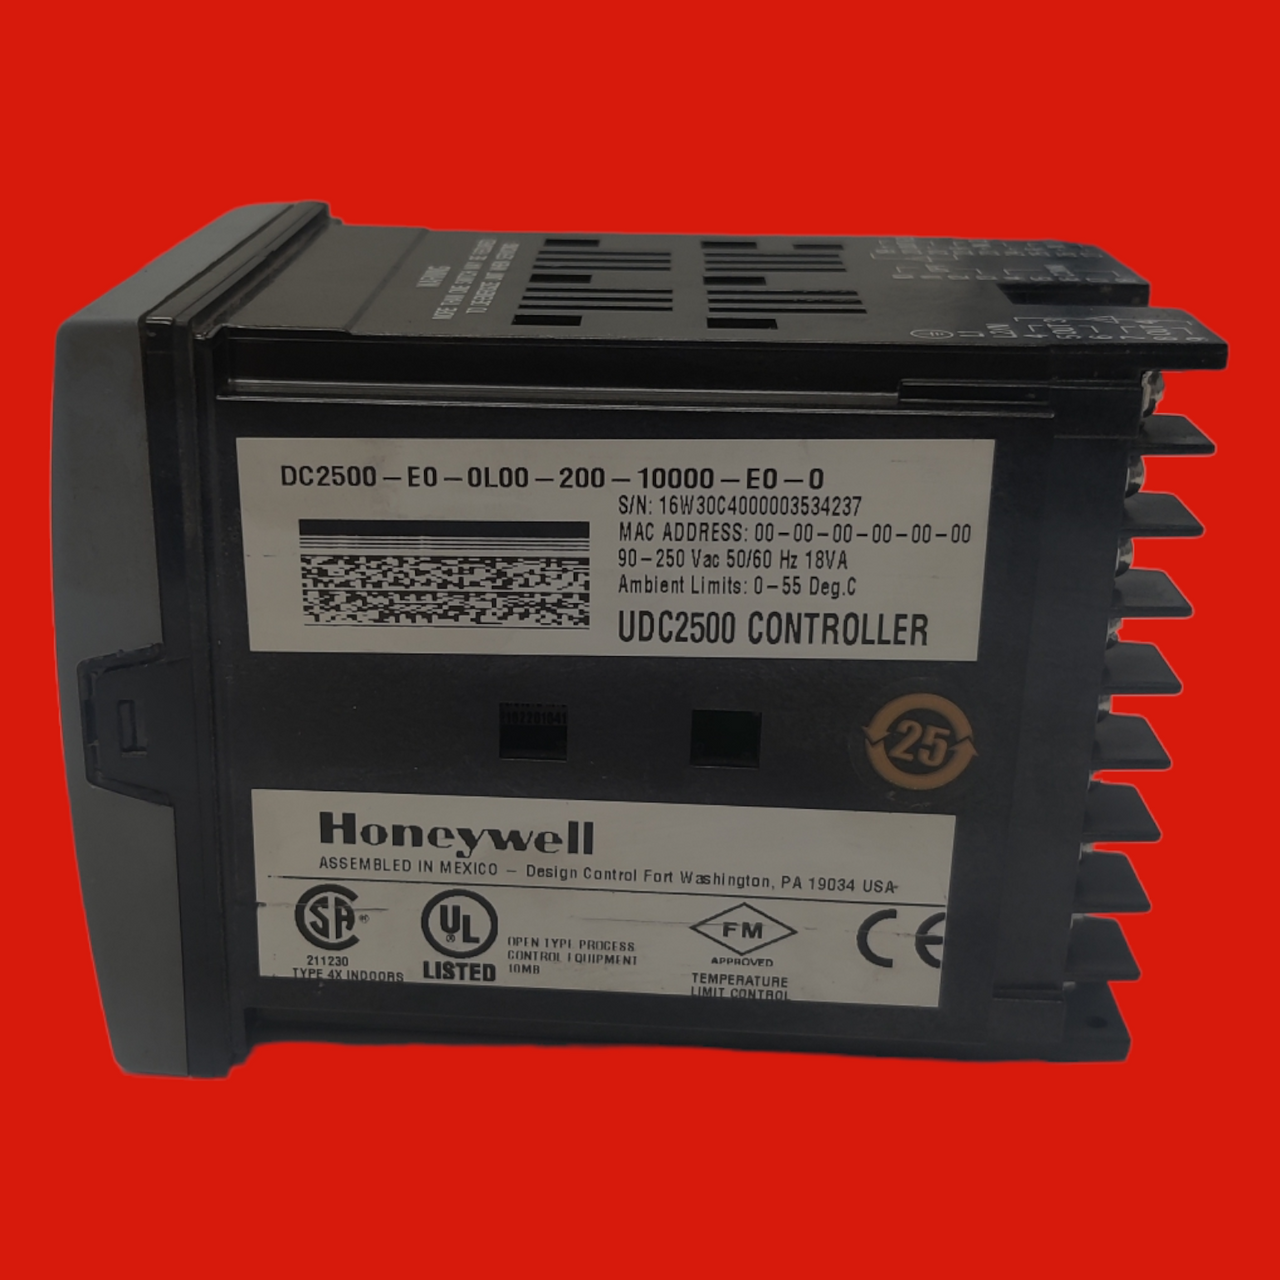 Honeywell UDC2500 (DC2500-E0-0L00-200-10000-E0-0) Hi Limit Controller